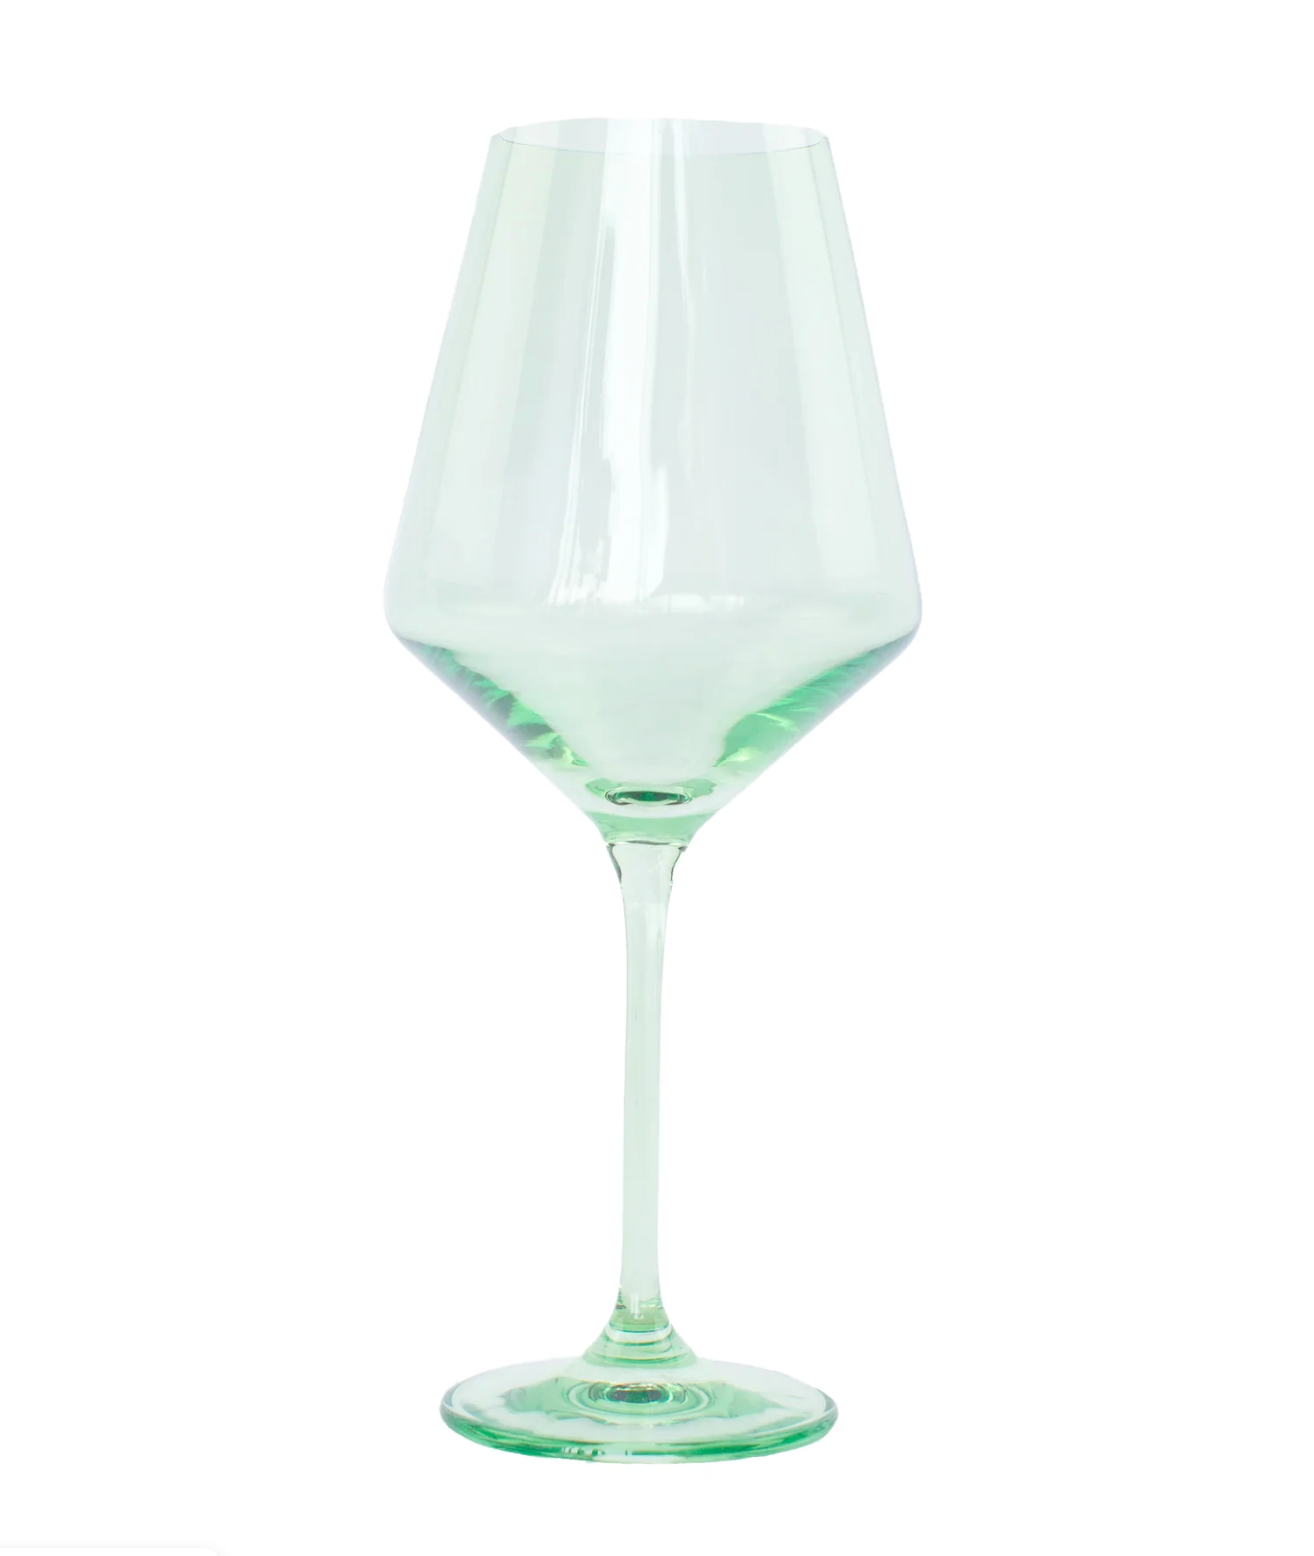 Stemmed Wine Glasses -Mint Green - Estelle Colored Glass (Set of 6)